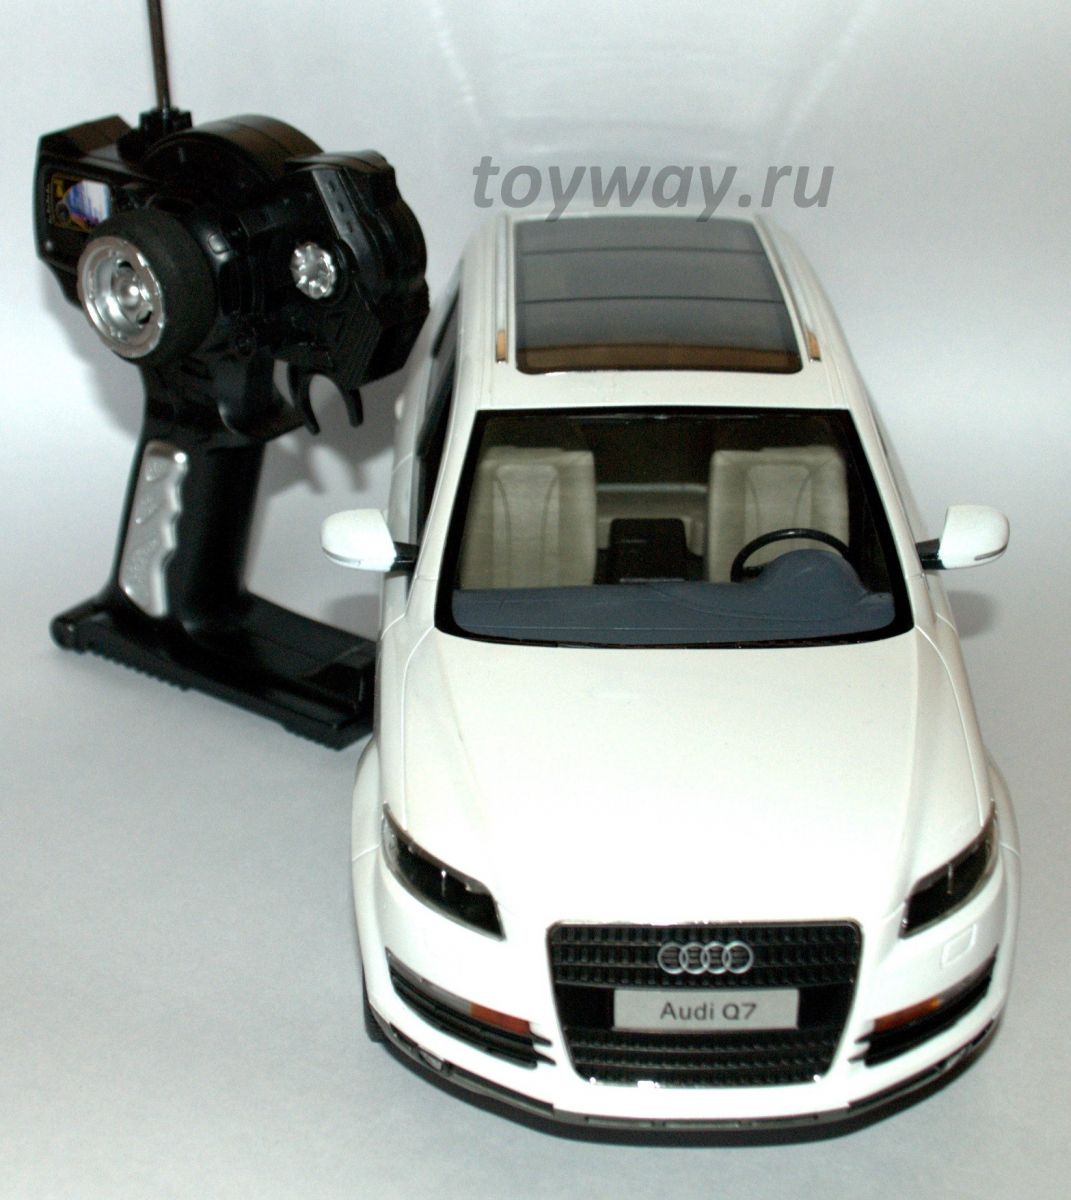 Audi Q7 на радиоуправлении  